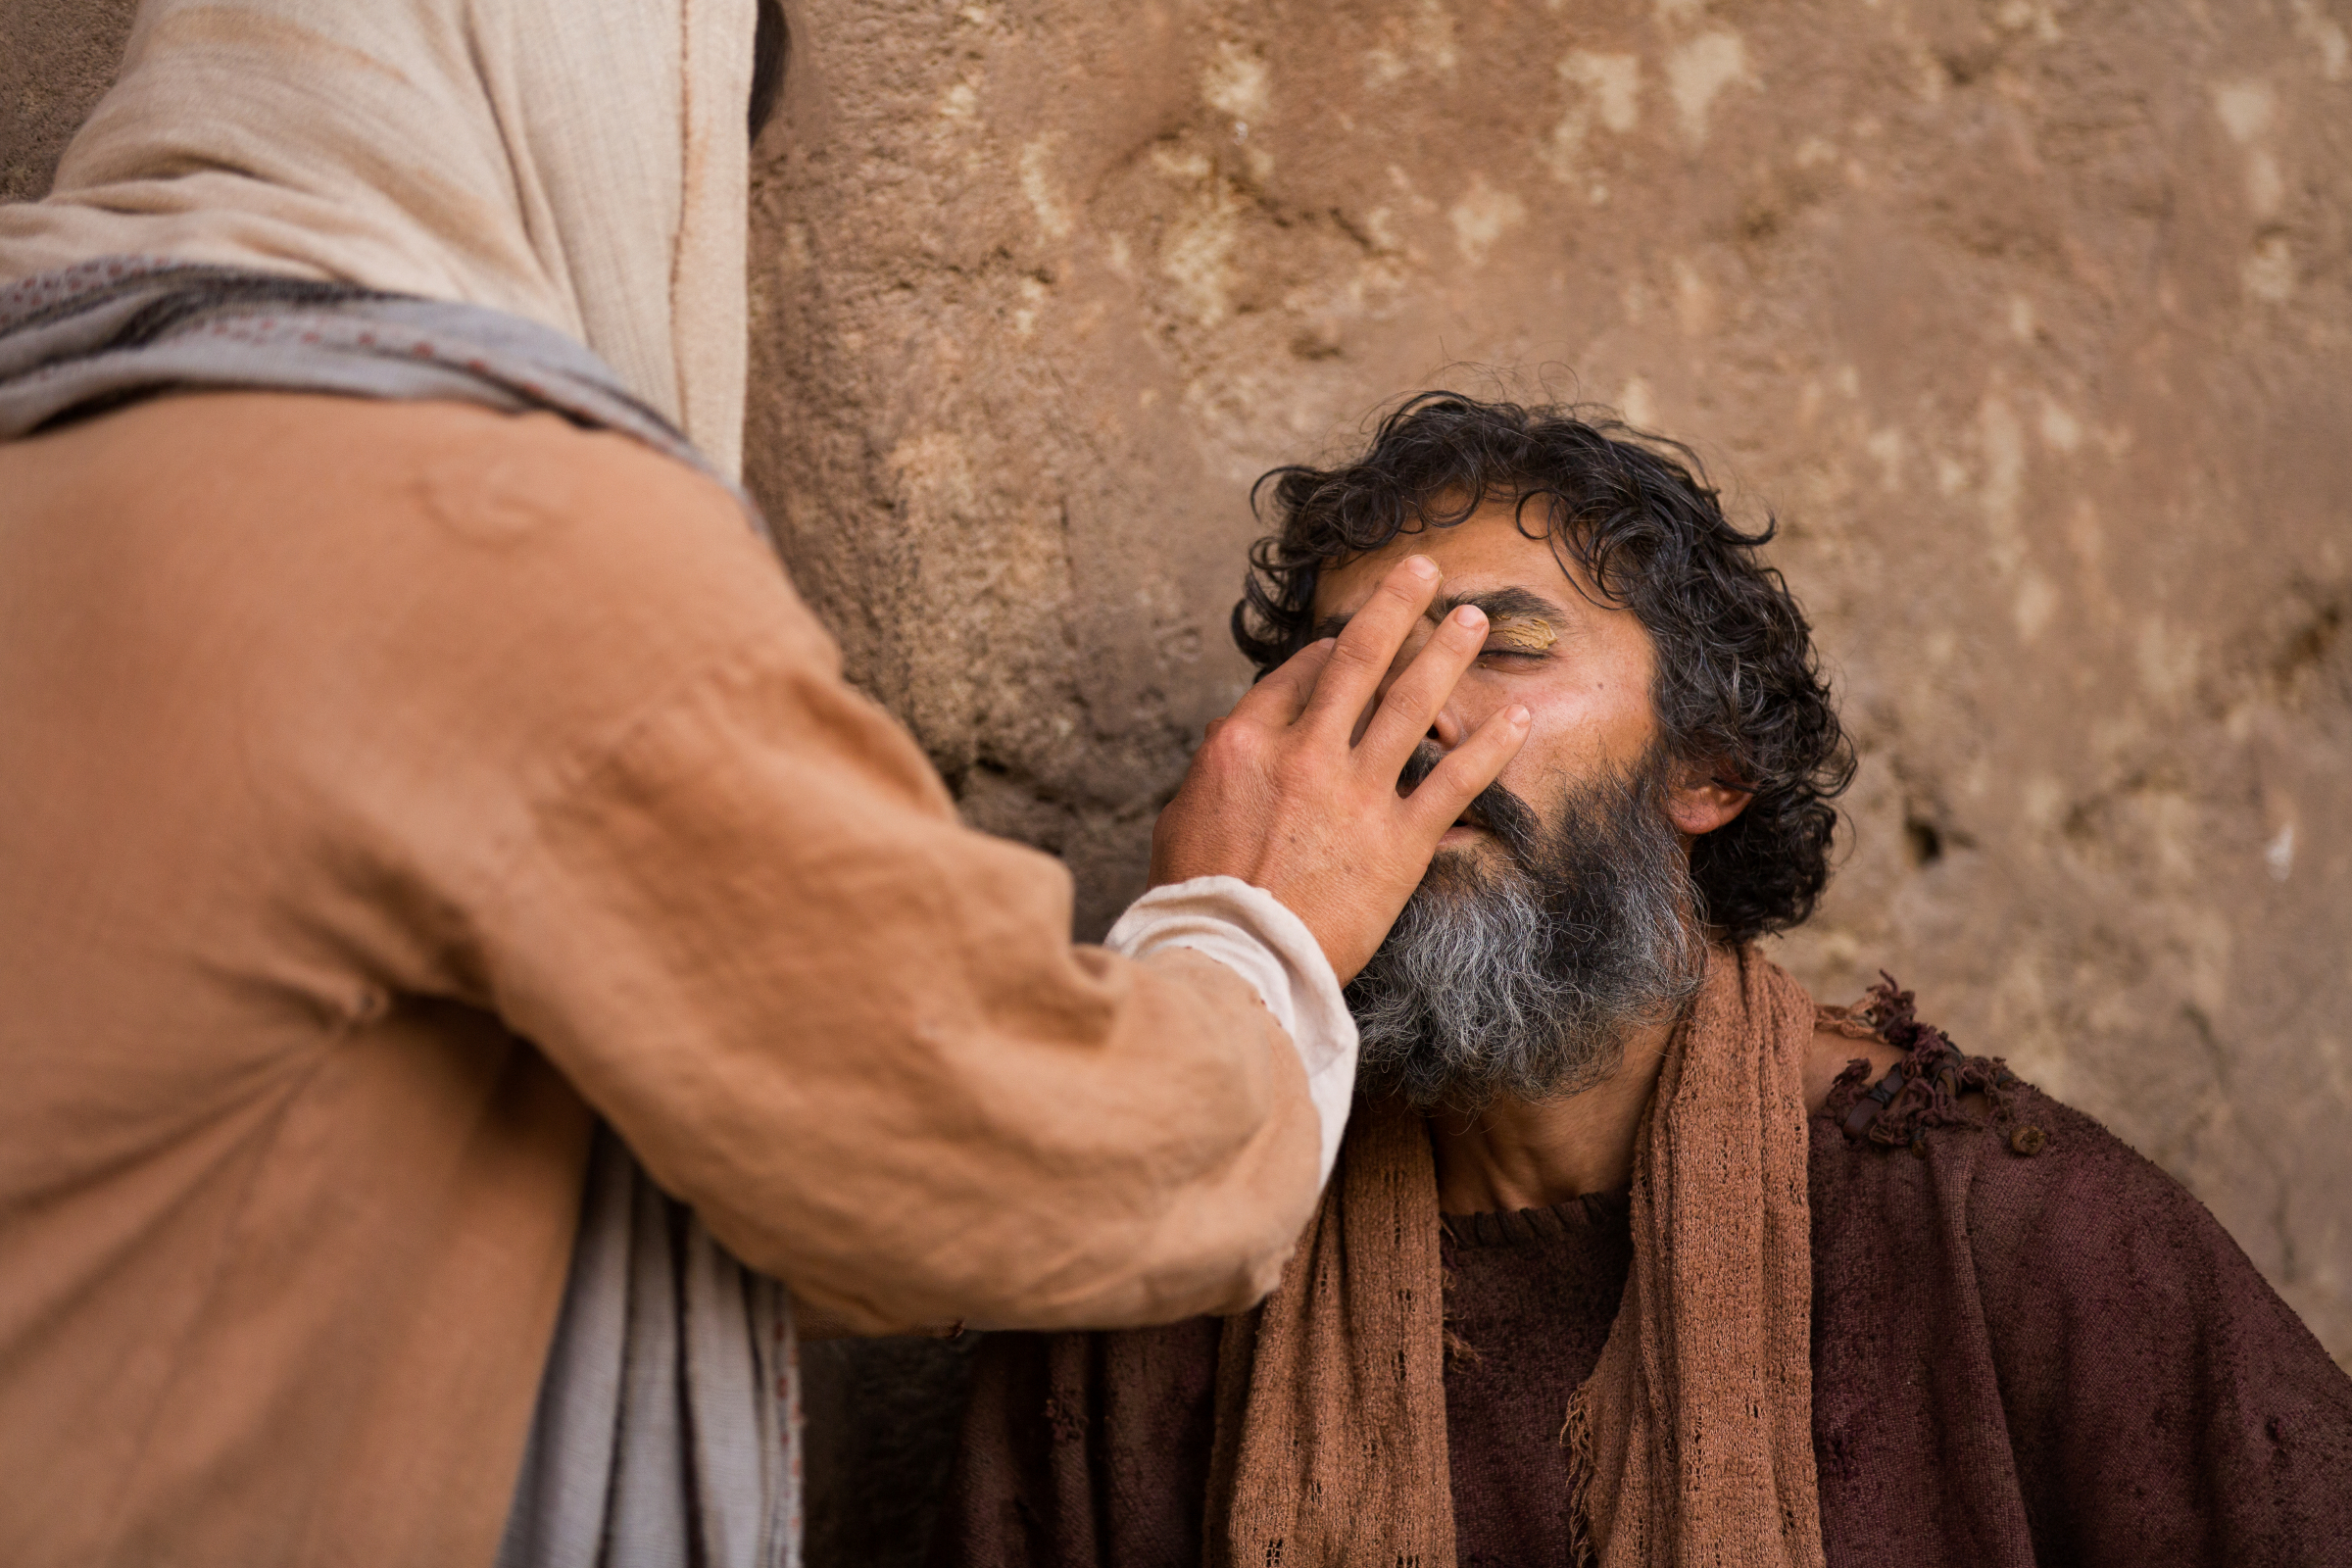 https://www.churchofjesuschrist.org/bc/content/bible-videos/videos/jesus-heals-a-man-born-blind/images/jesus-annoints-a-man-born-blind.jpg